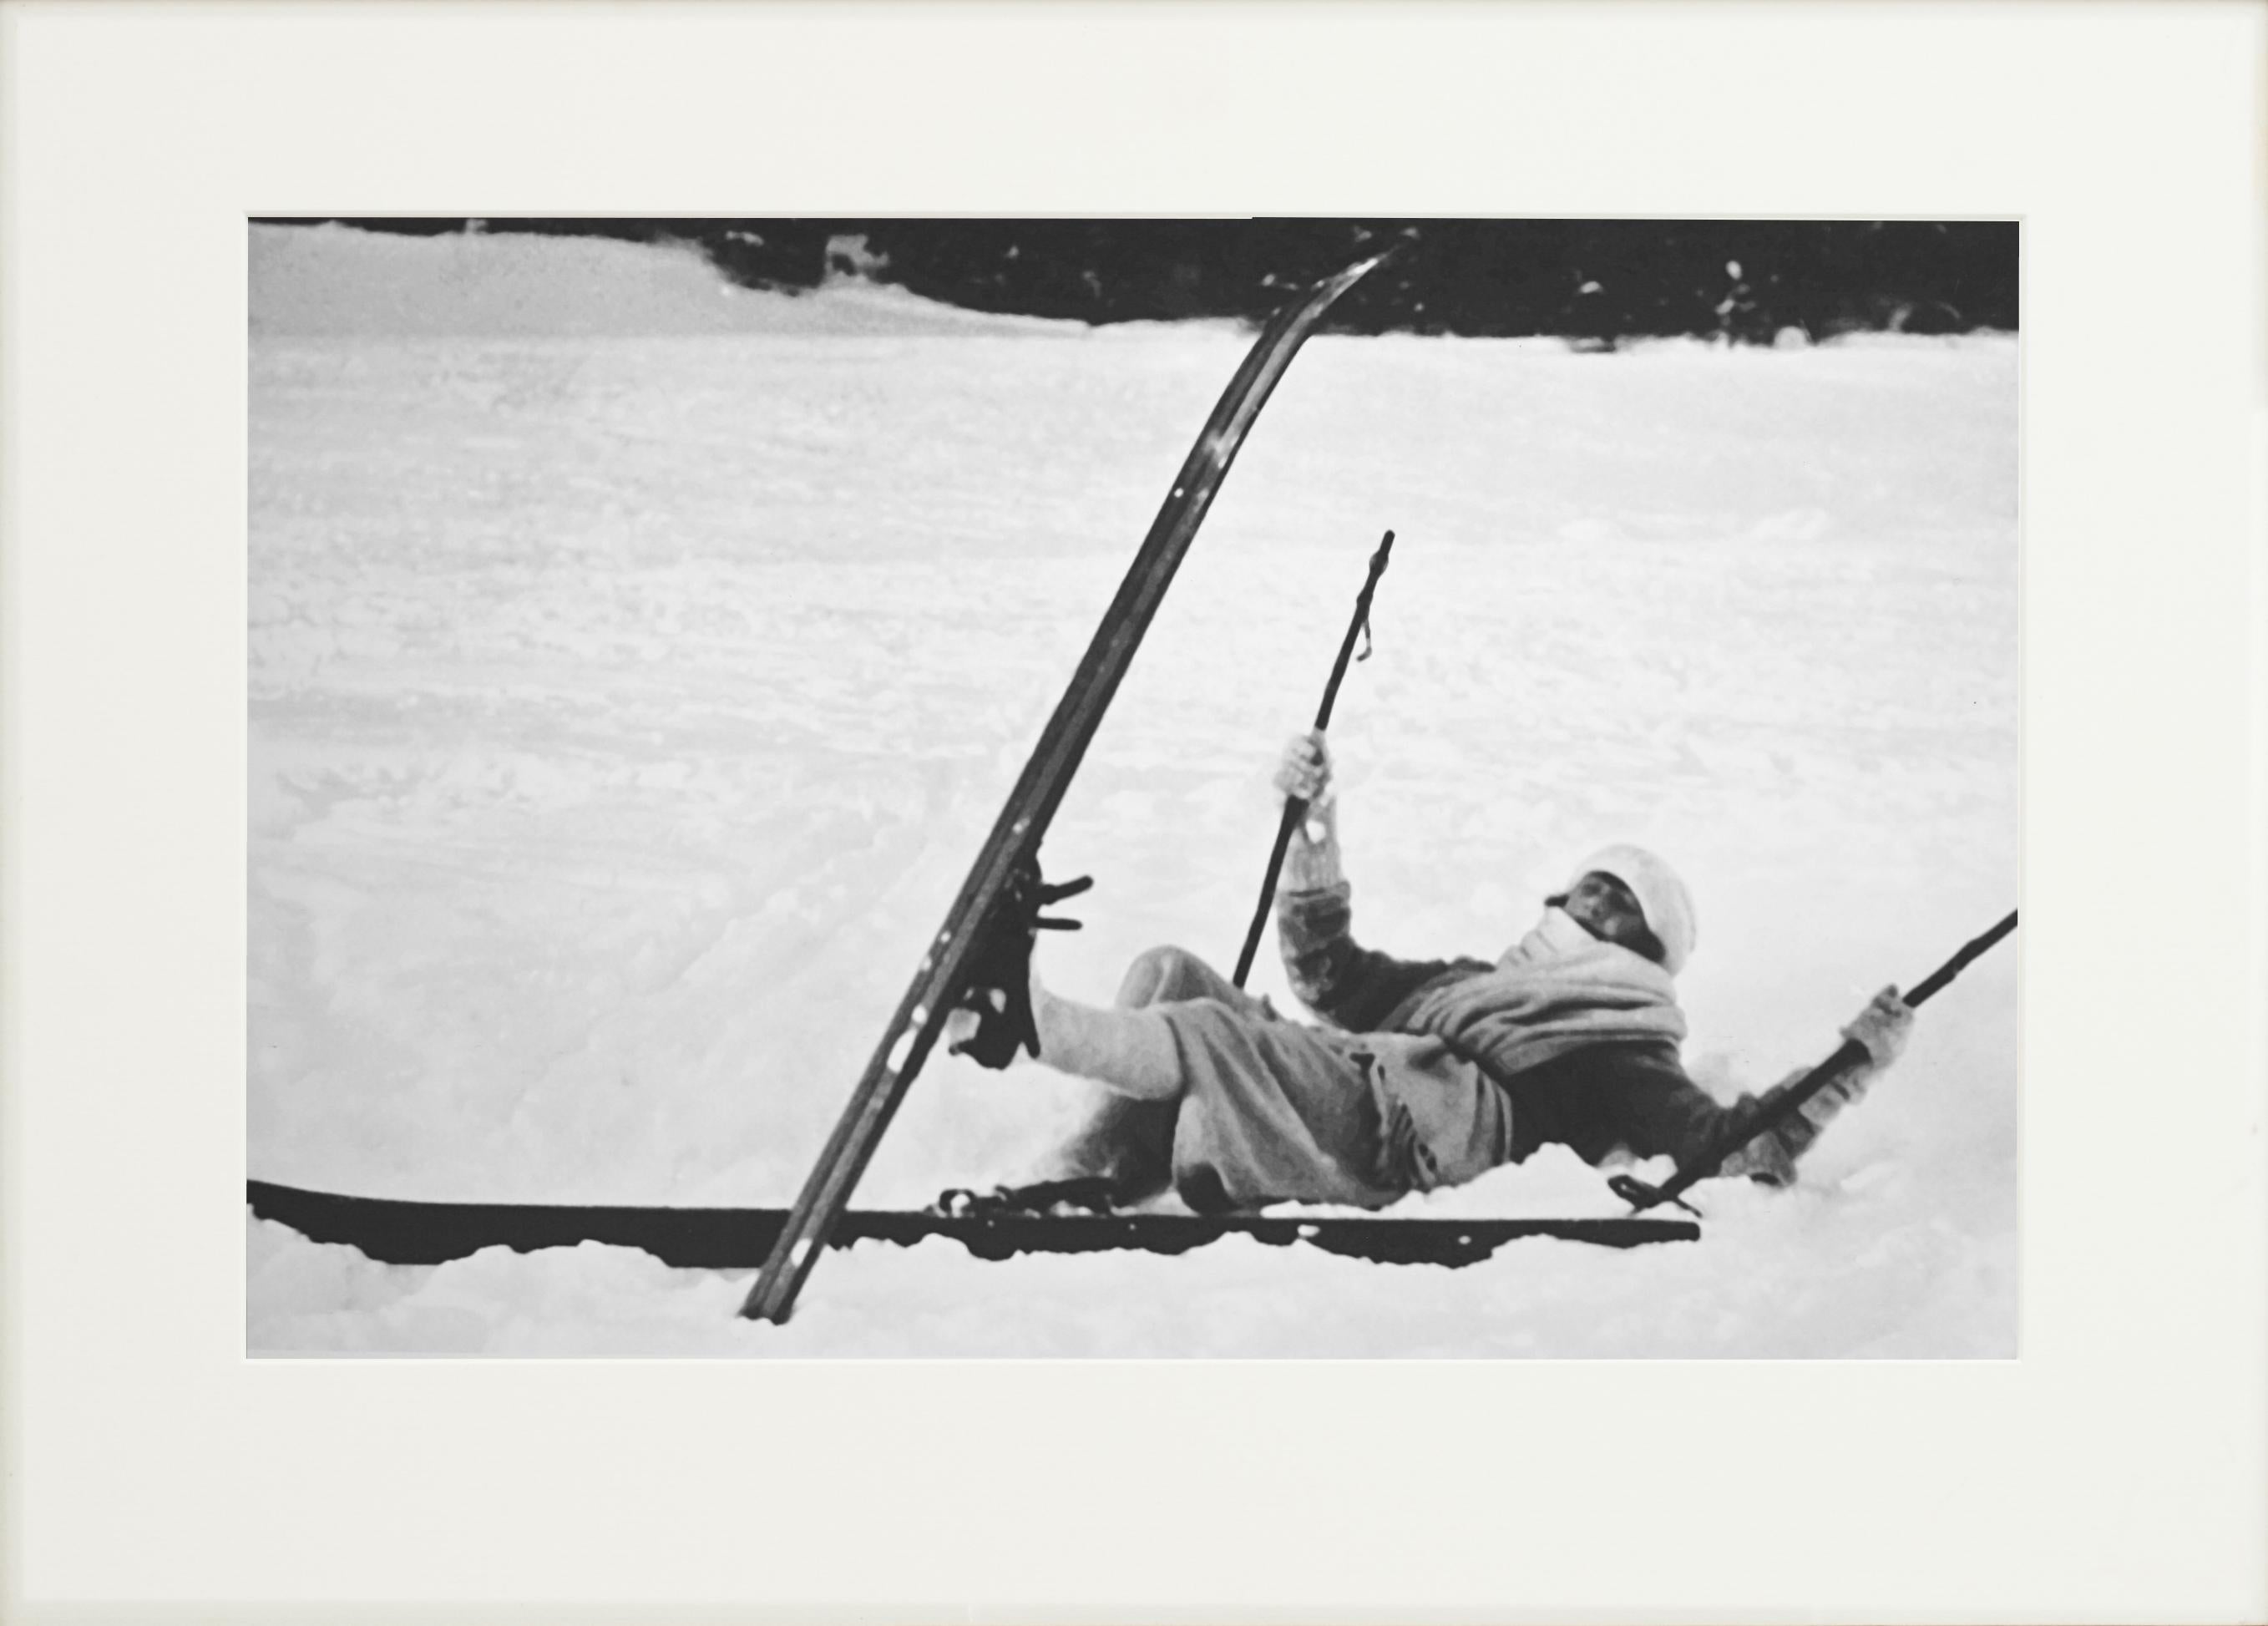 Sporting Art Alpine Ski Photograph, 'OPPS! Taken from Original 1930s Photograph